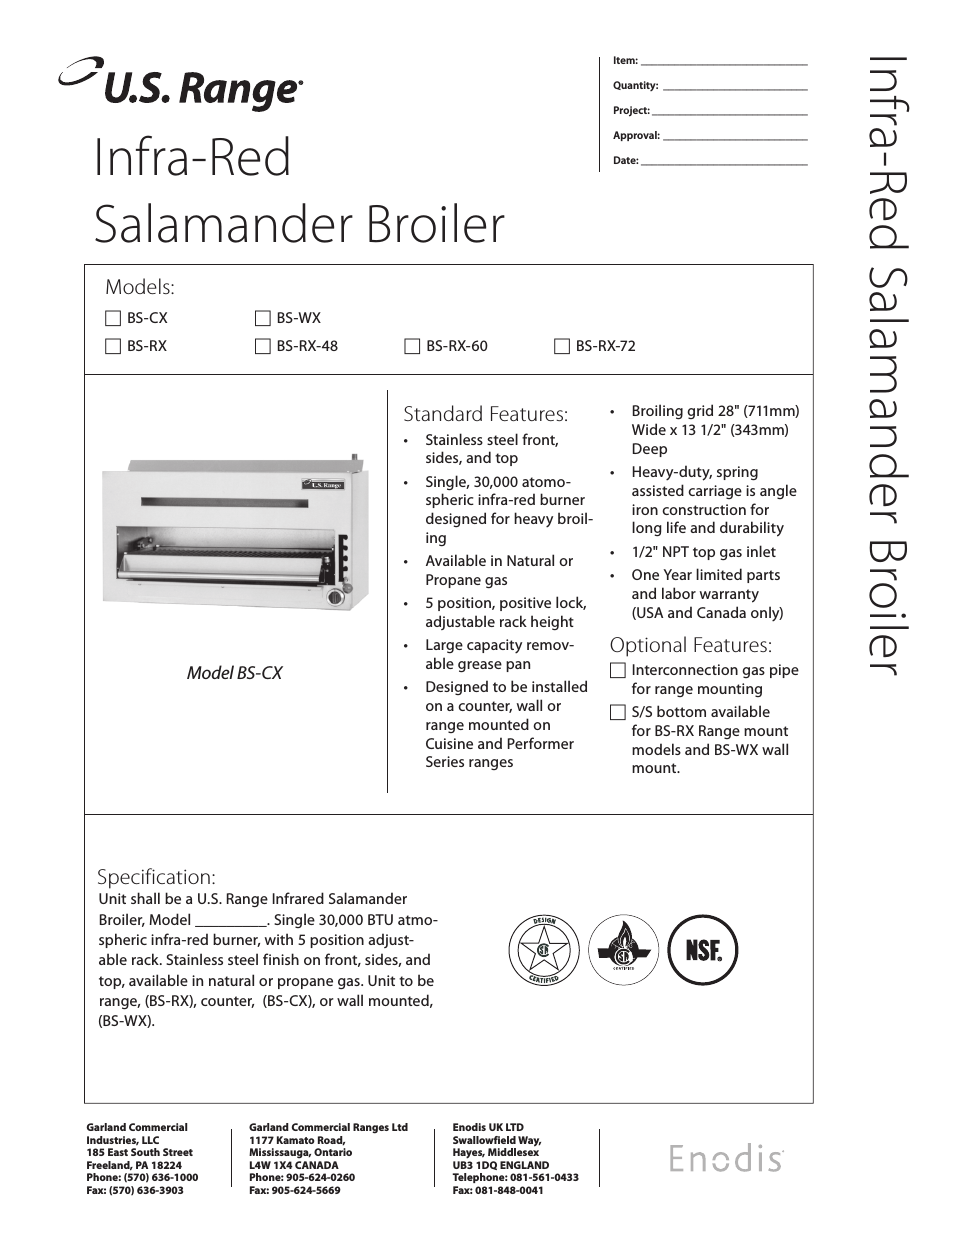 Infra-Red Salamander Broiler BS-RX-48